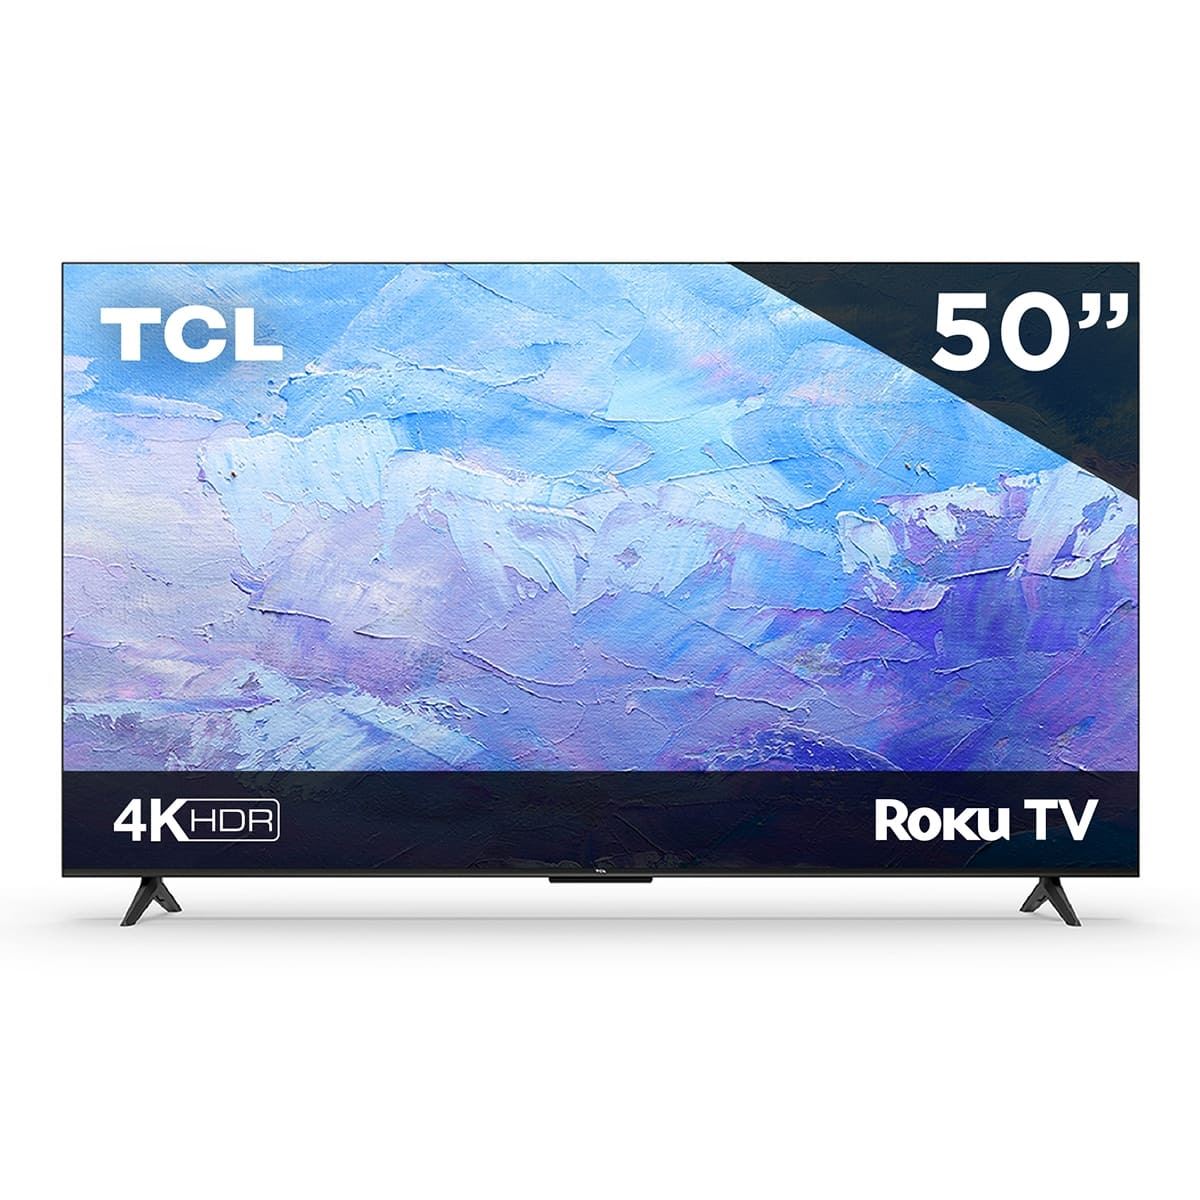 Pantalla TCL 50 Pulgadas UHD 4K Roku TV a precio de socio